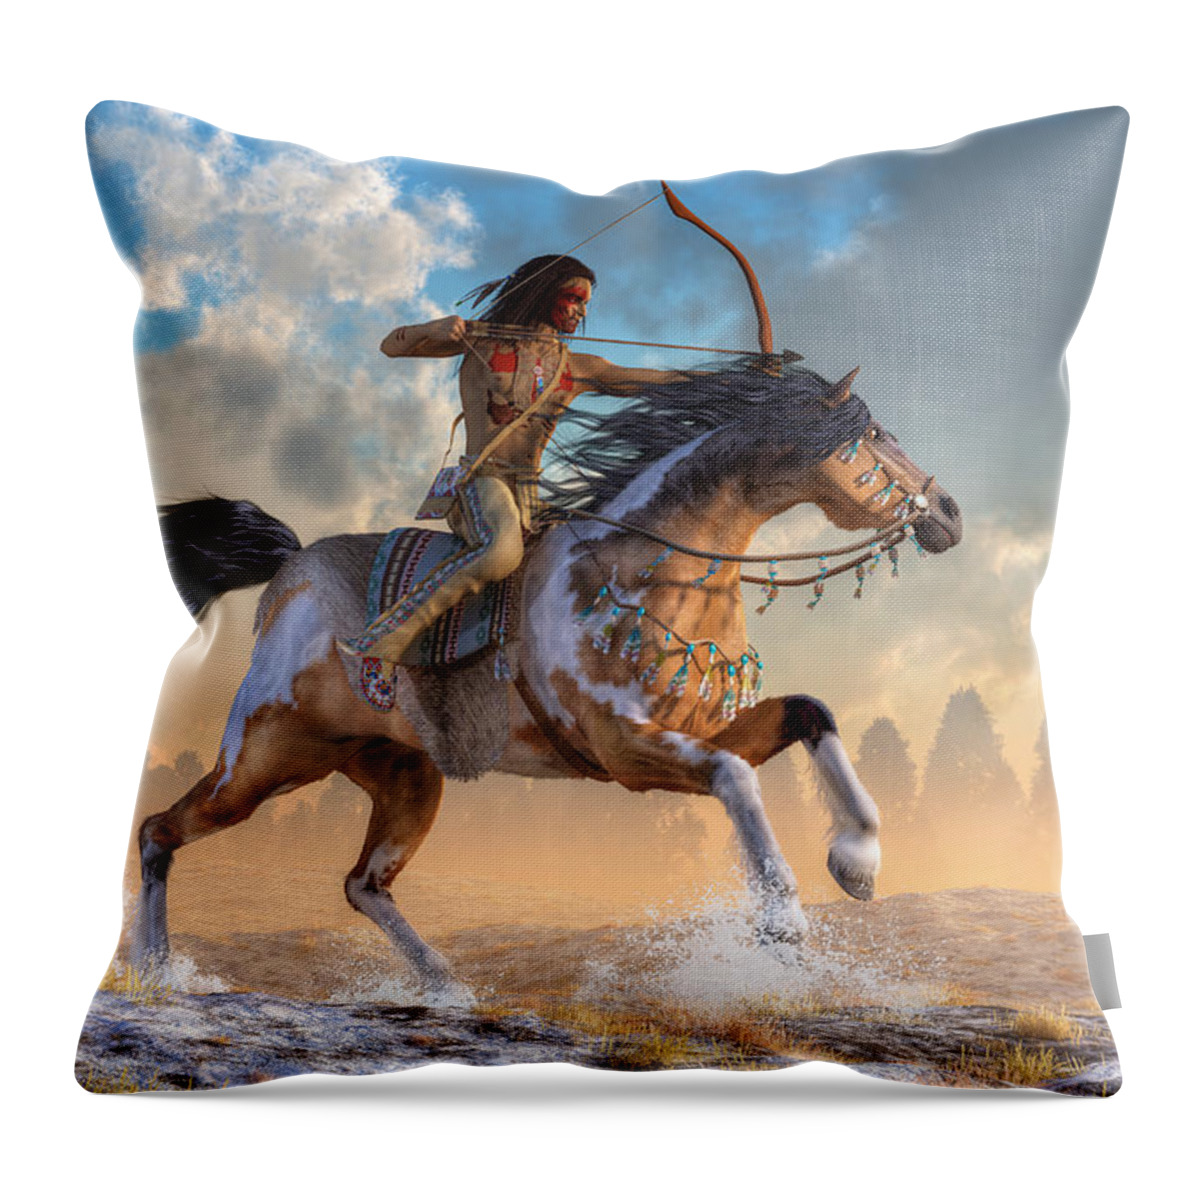 Archer On Horseback Throw Pillow featuring the digital art Archer on Horseback by Daniel Eskridge